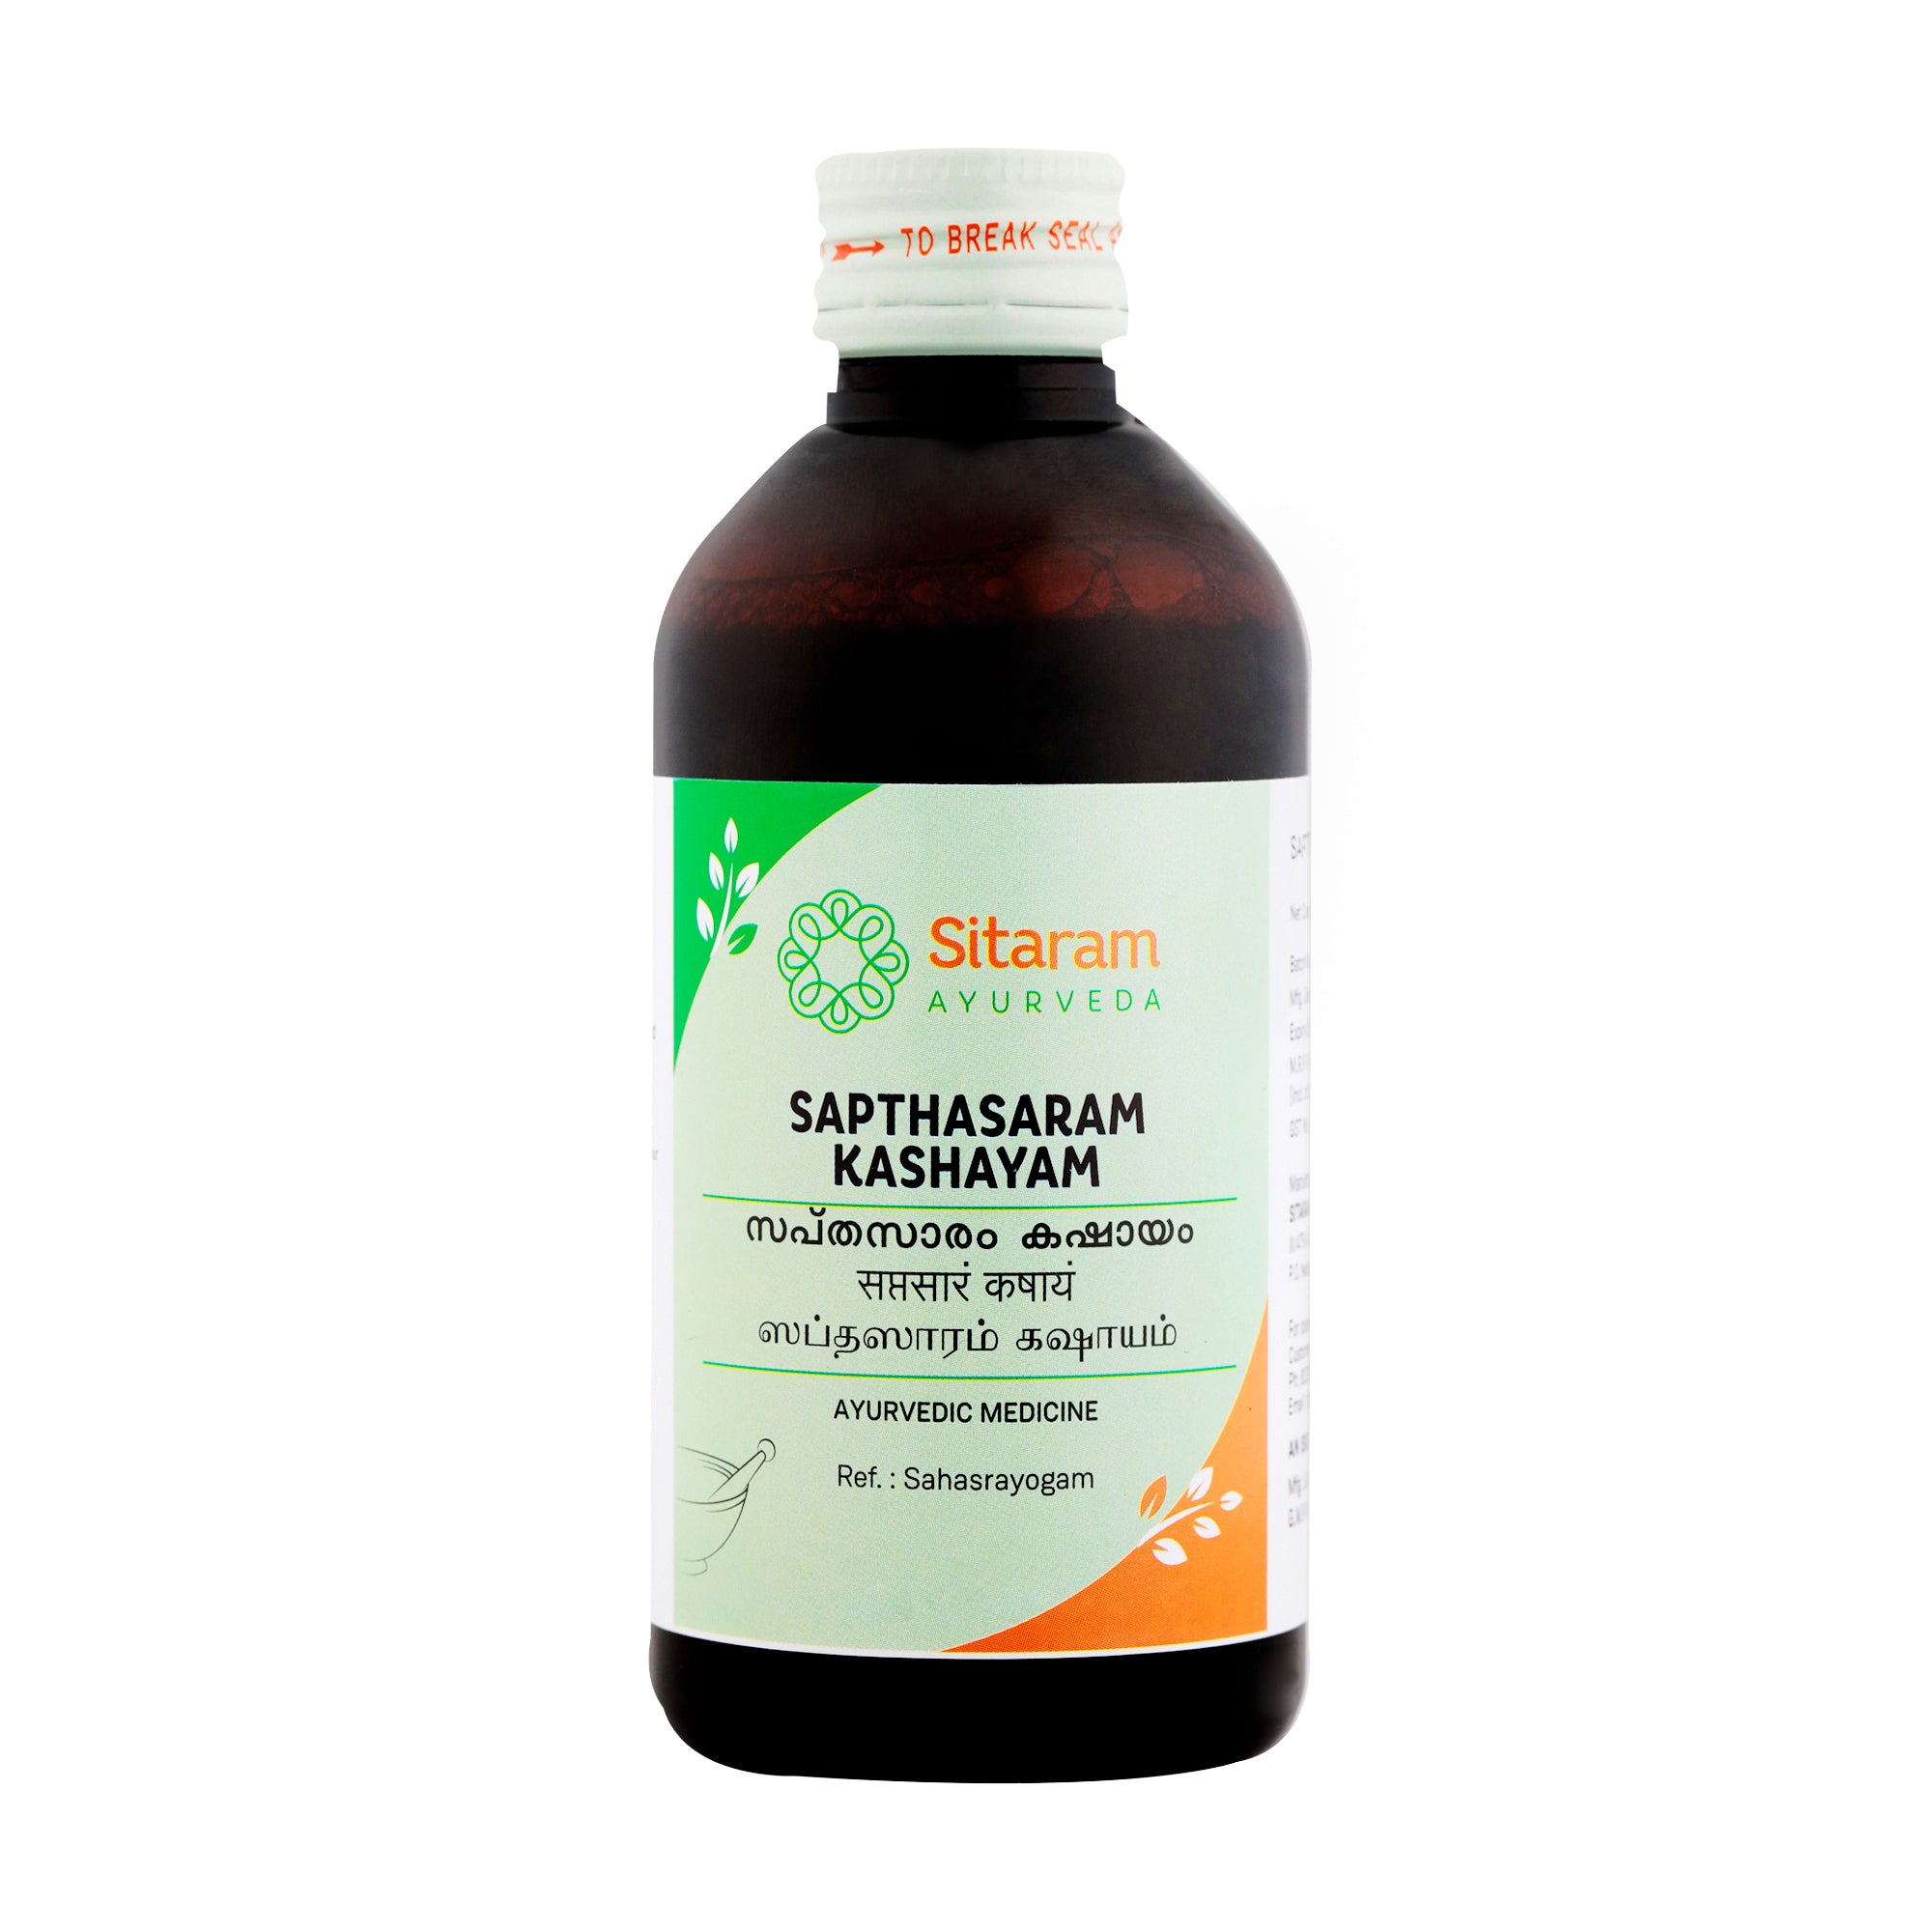 Sitaram Ayurveda Sapthasaram Kashayam 200Ml - Pack of 2 (Prescription Medication)